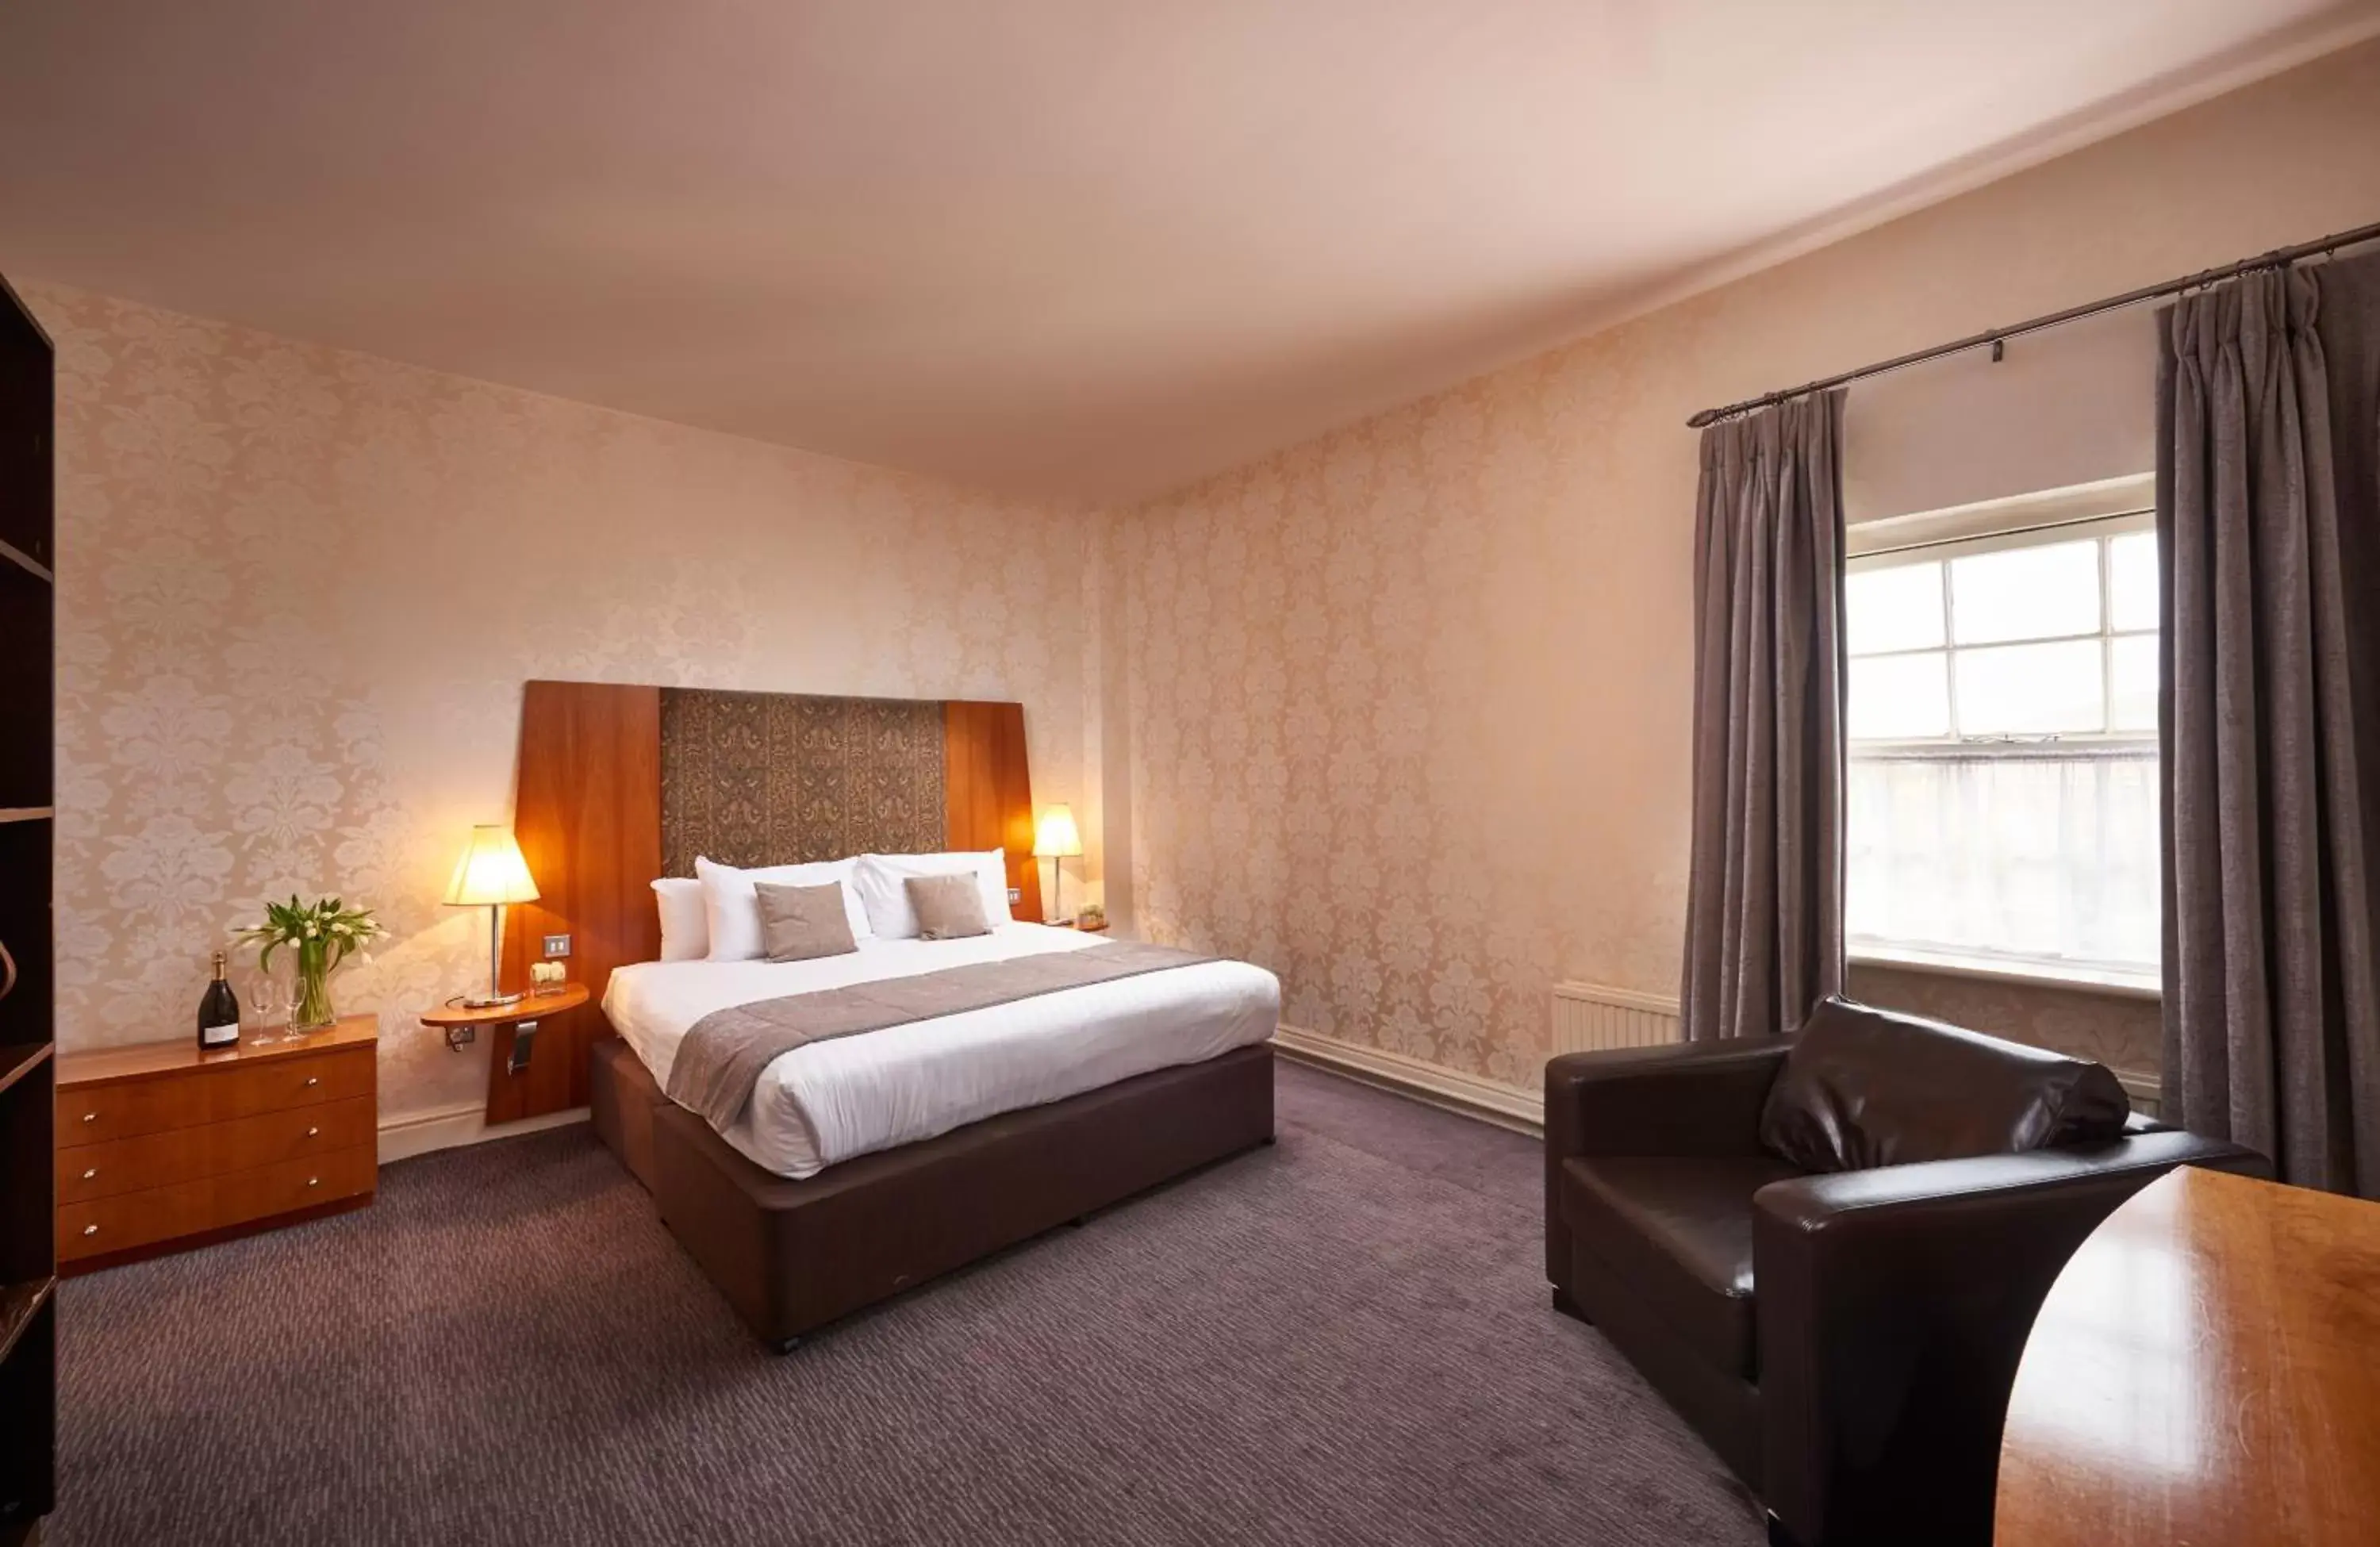 Bed, Room Photo in The Regency Hotel